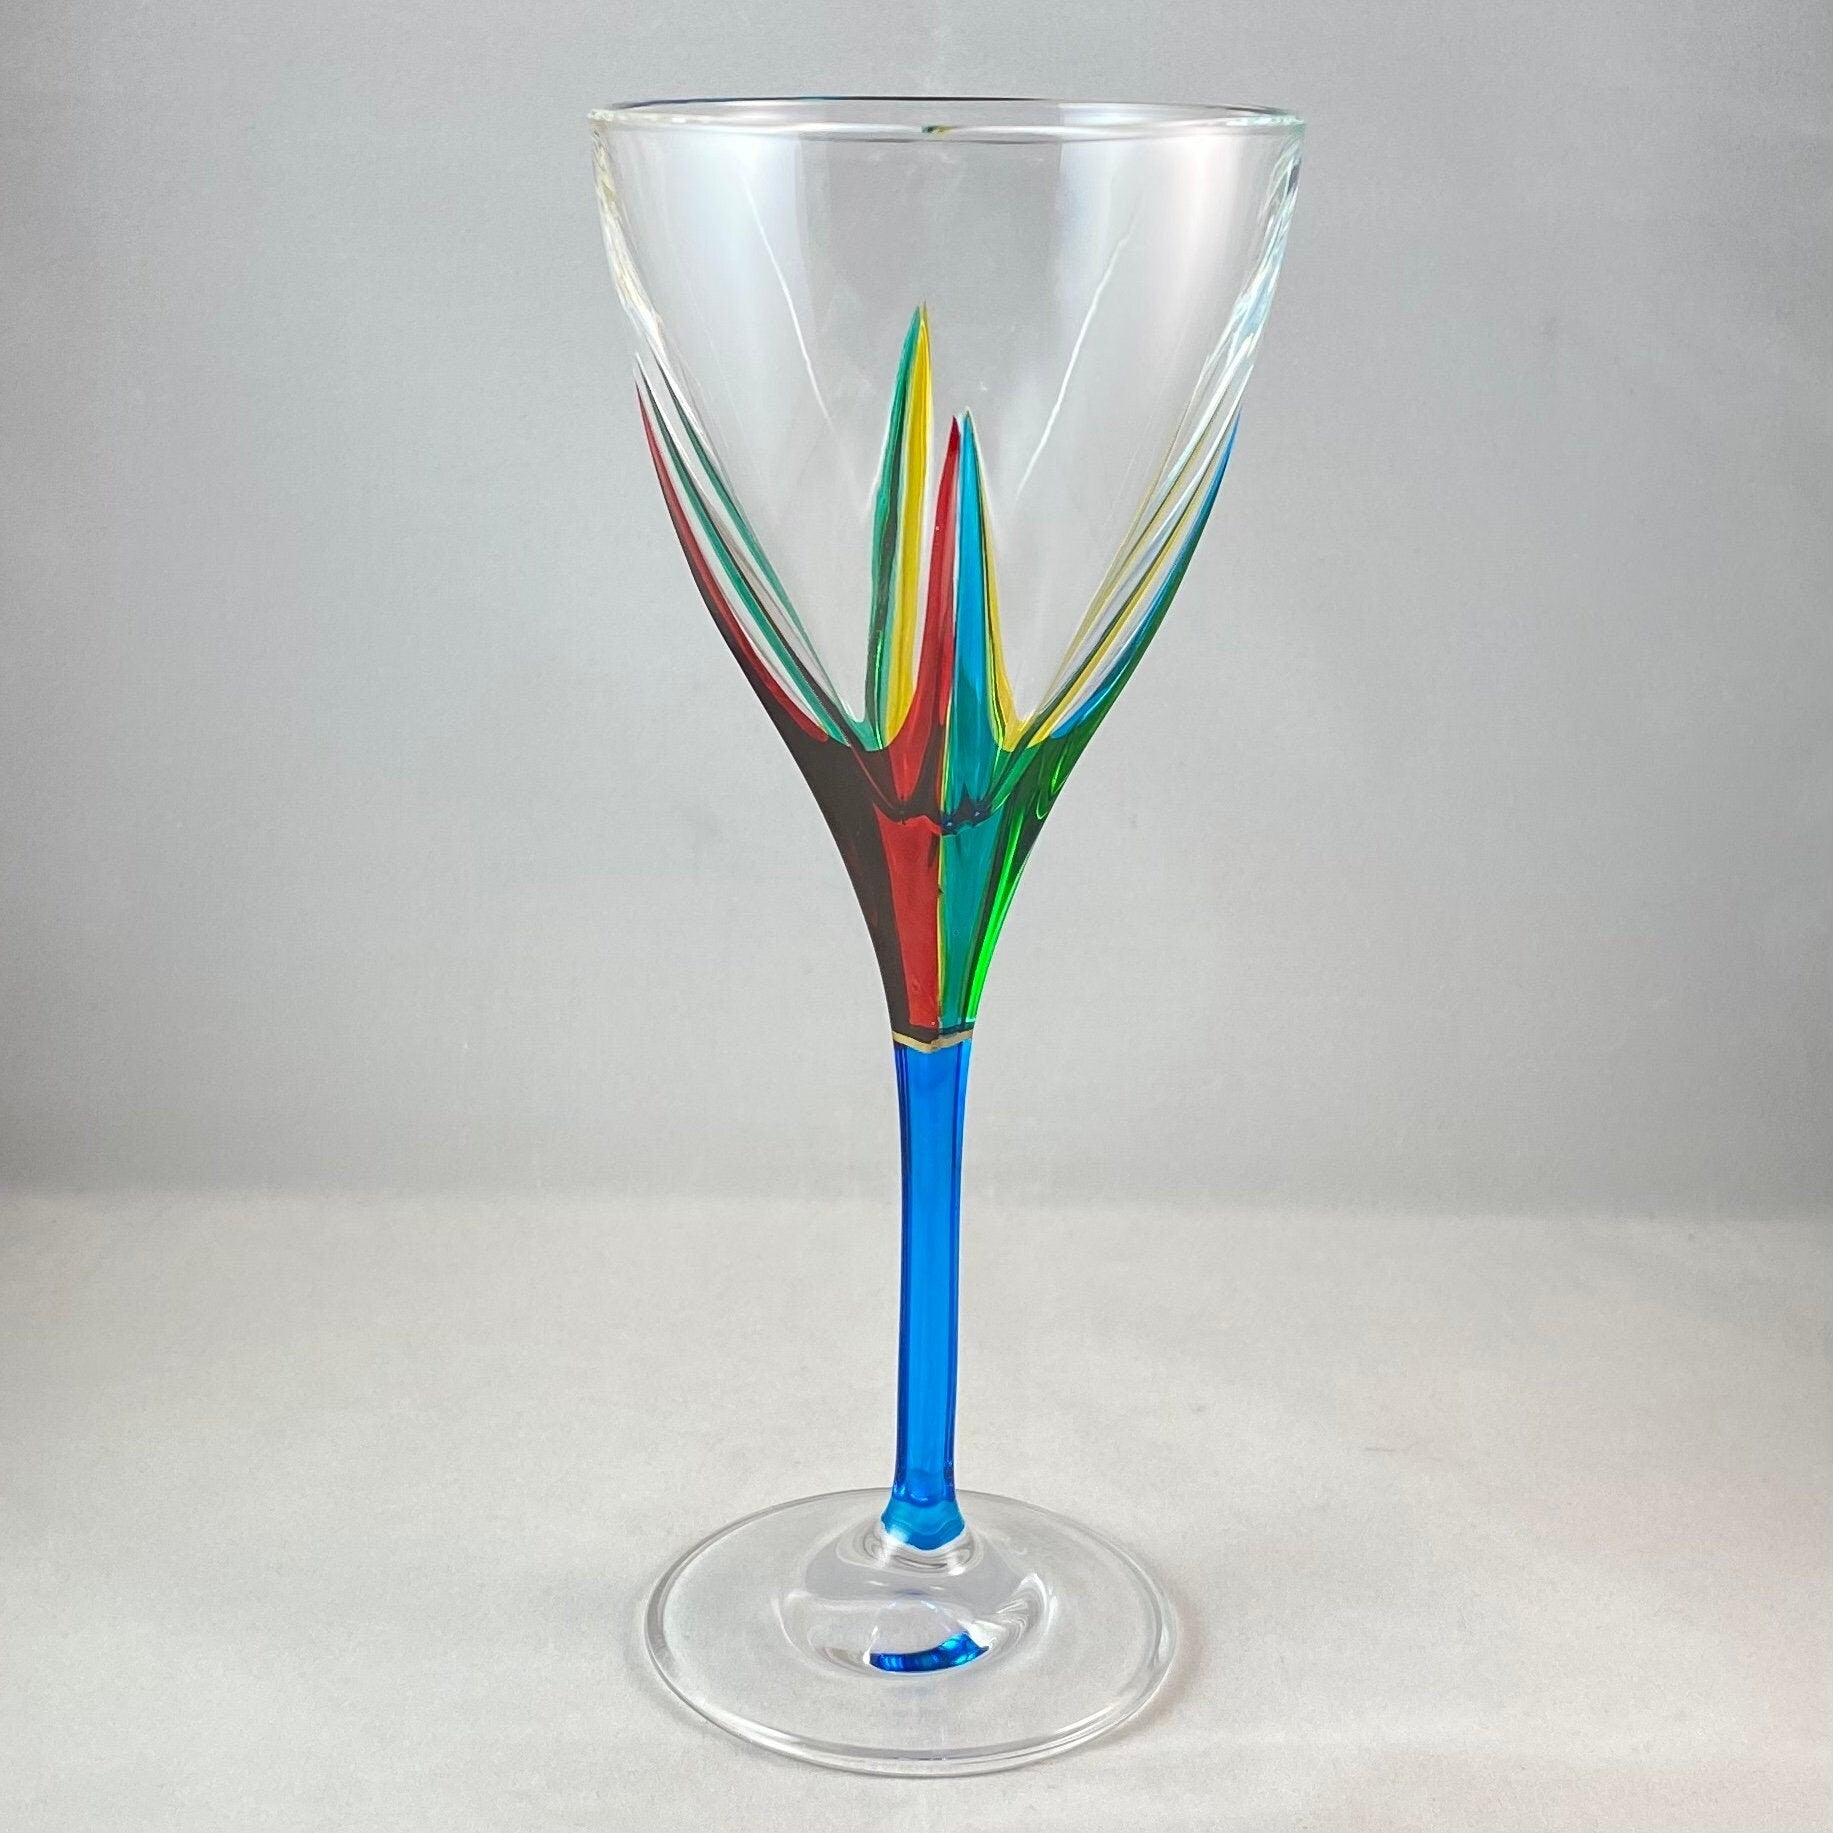 Aqua Blue Stem Fusion Venetian Glass Wine Glass - Handmade in Italy, Colorful Murano Glass